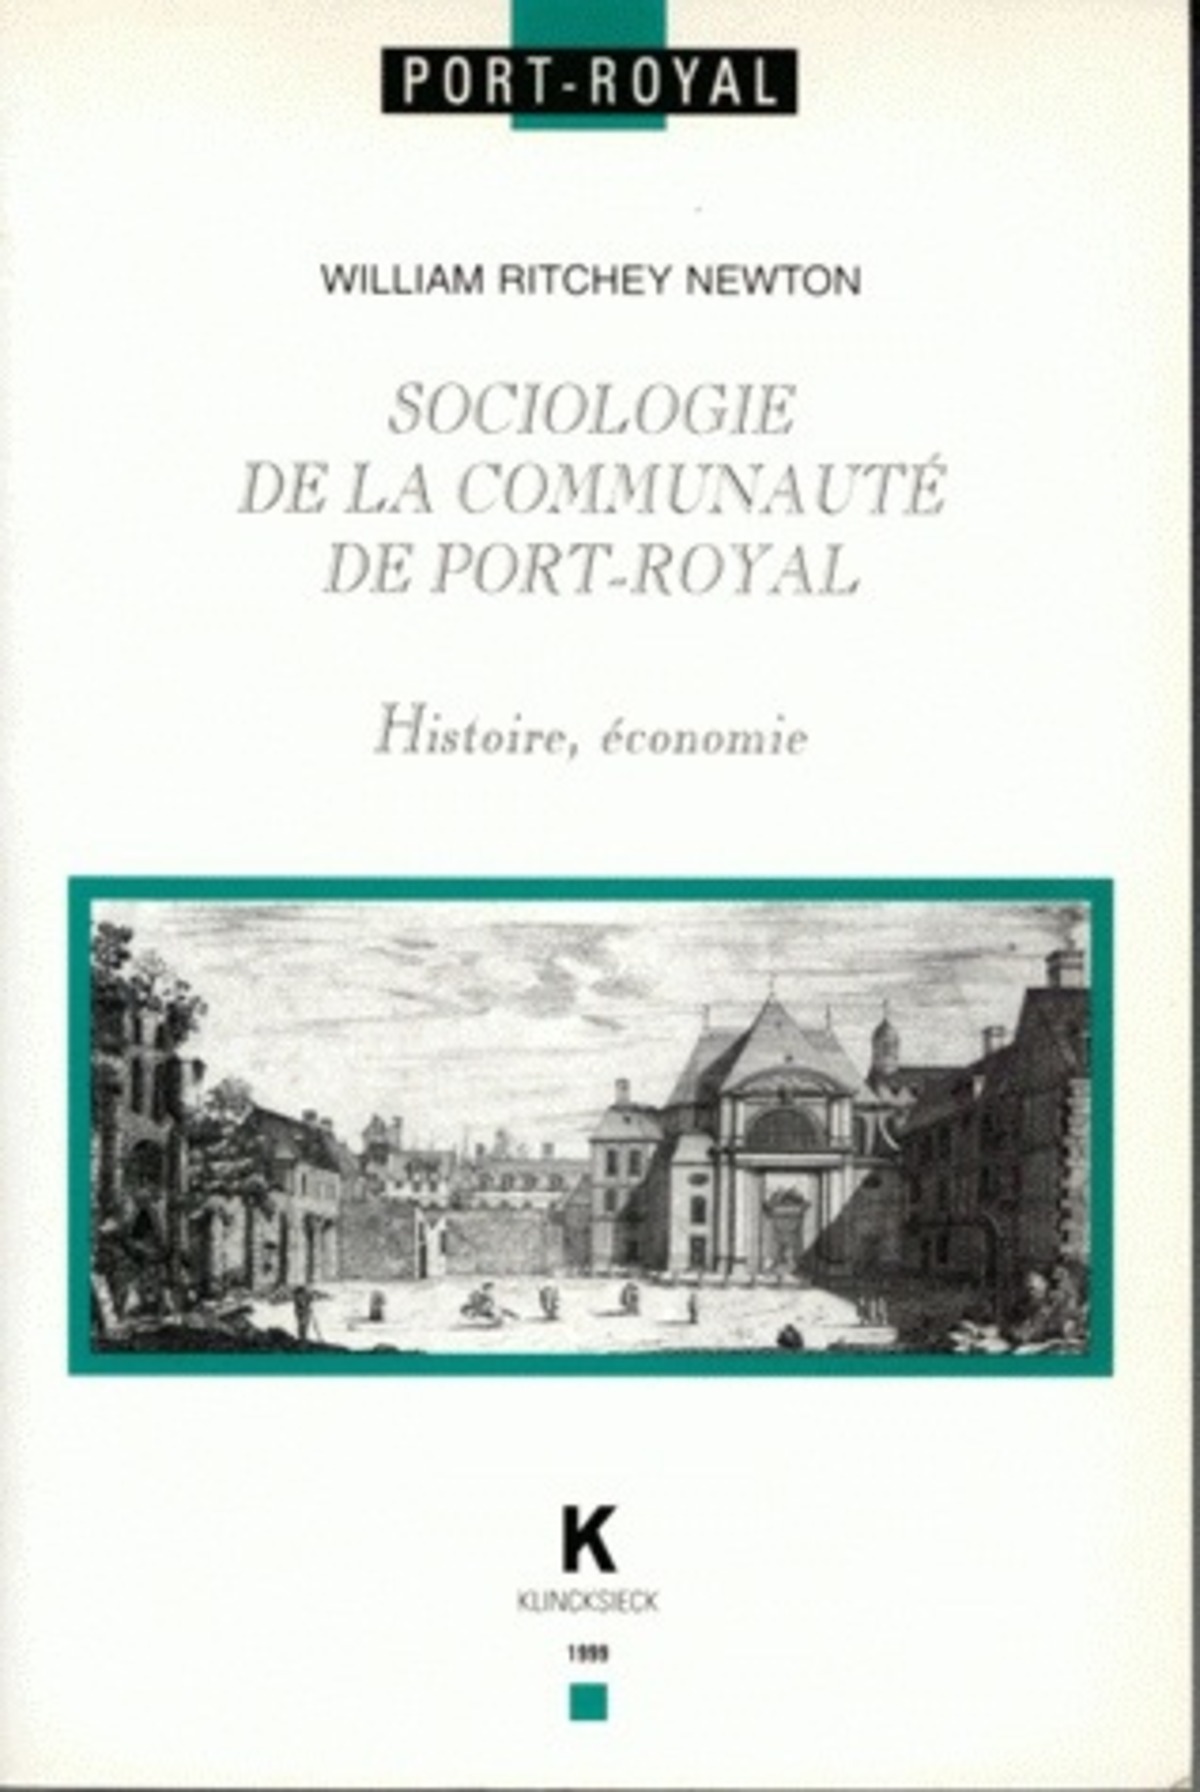 Sociologie de la communauté de Port-Royal